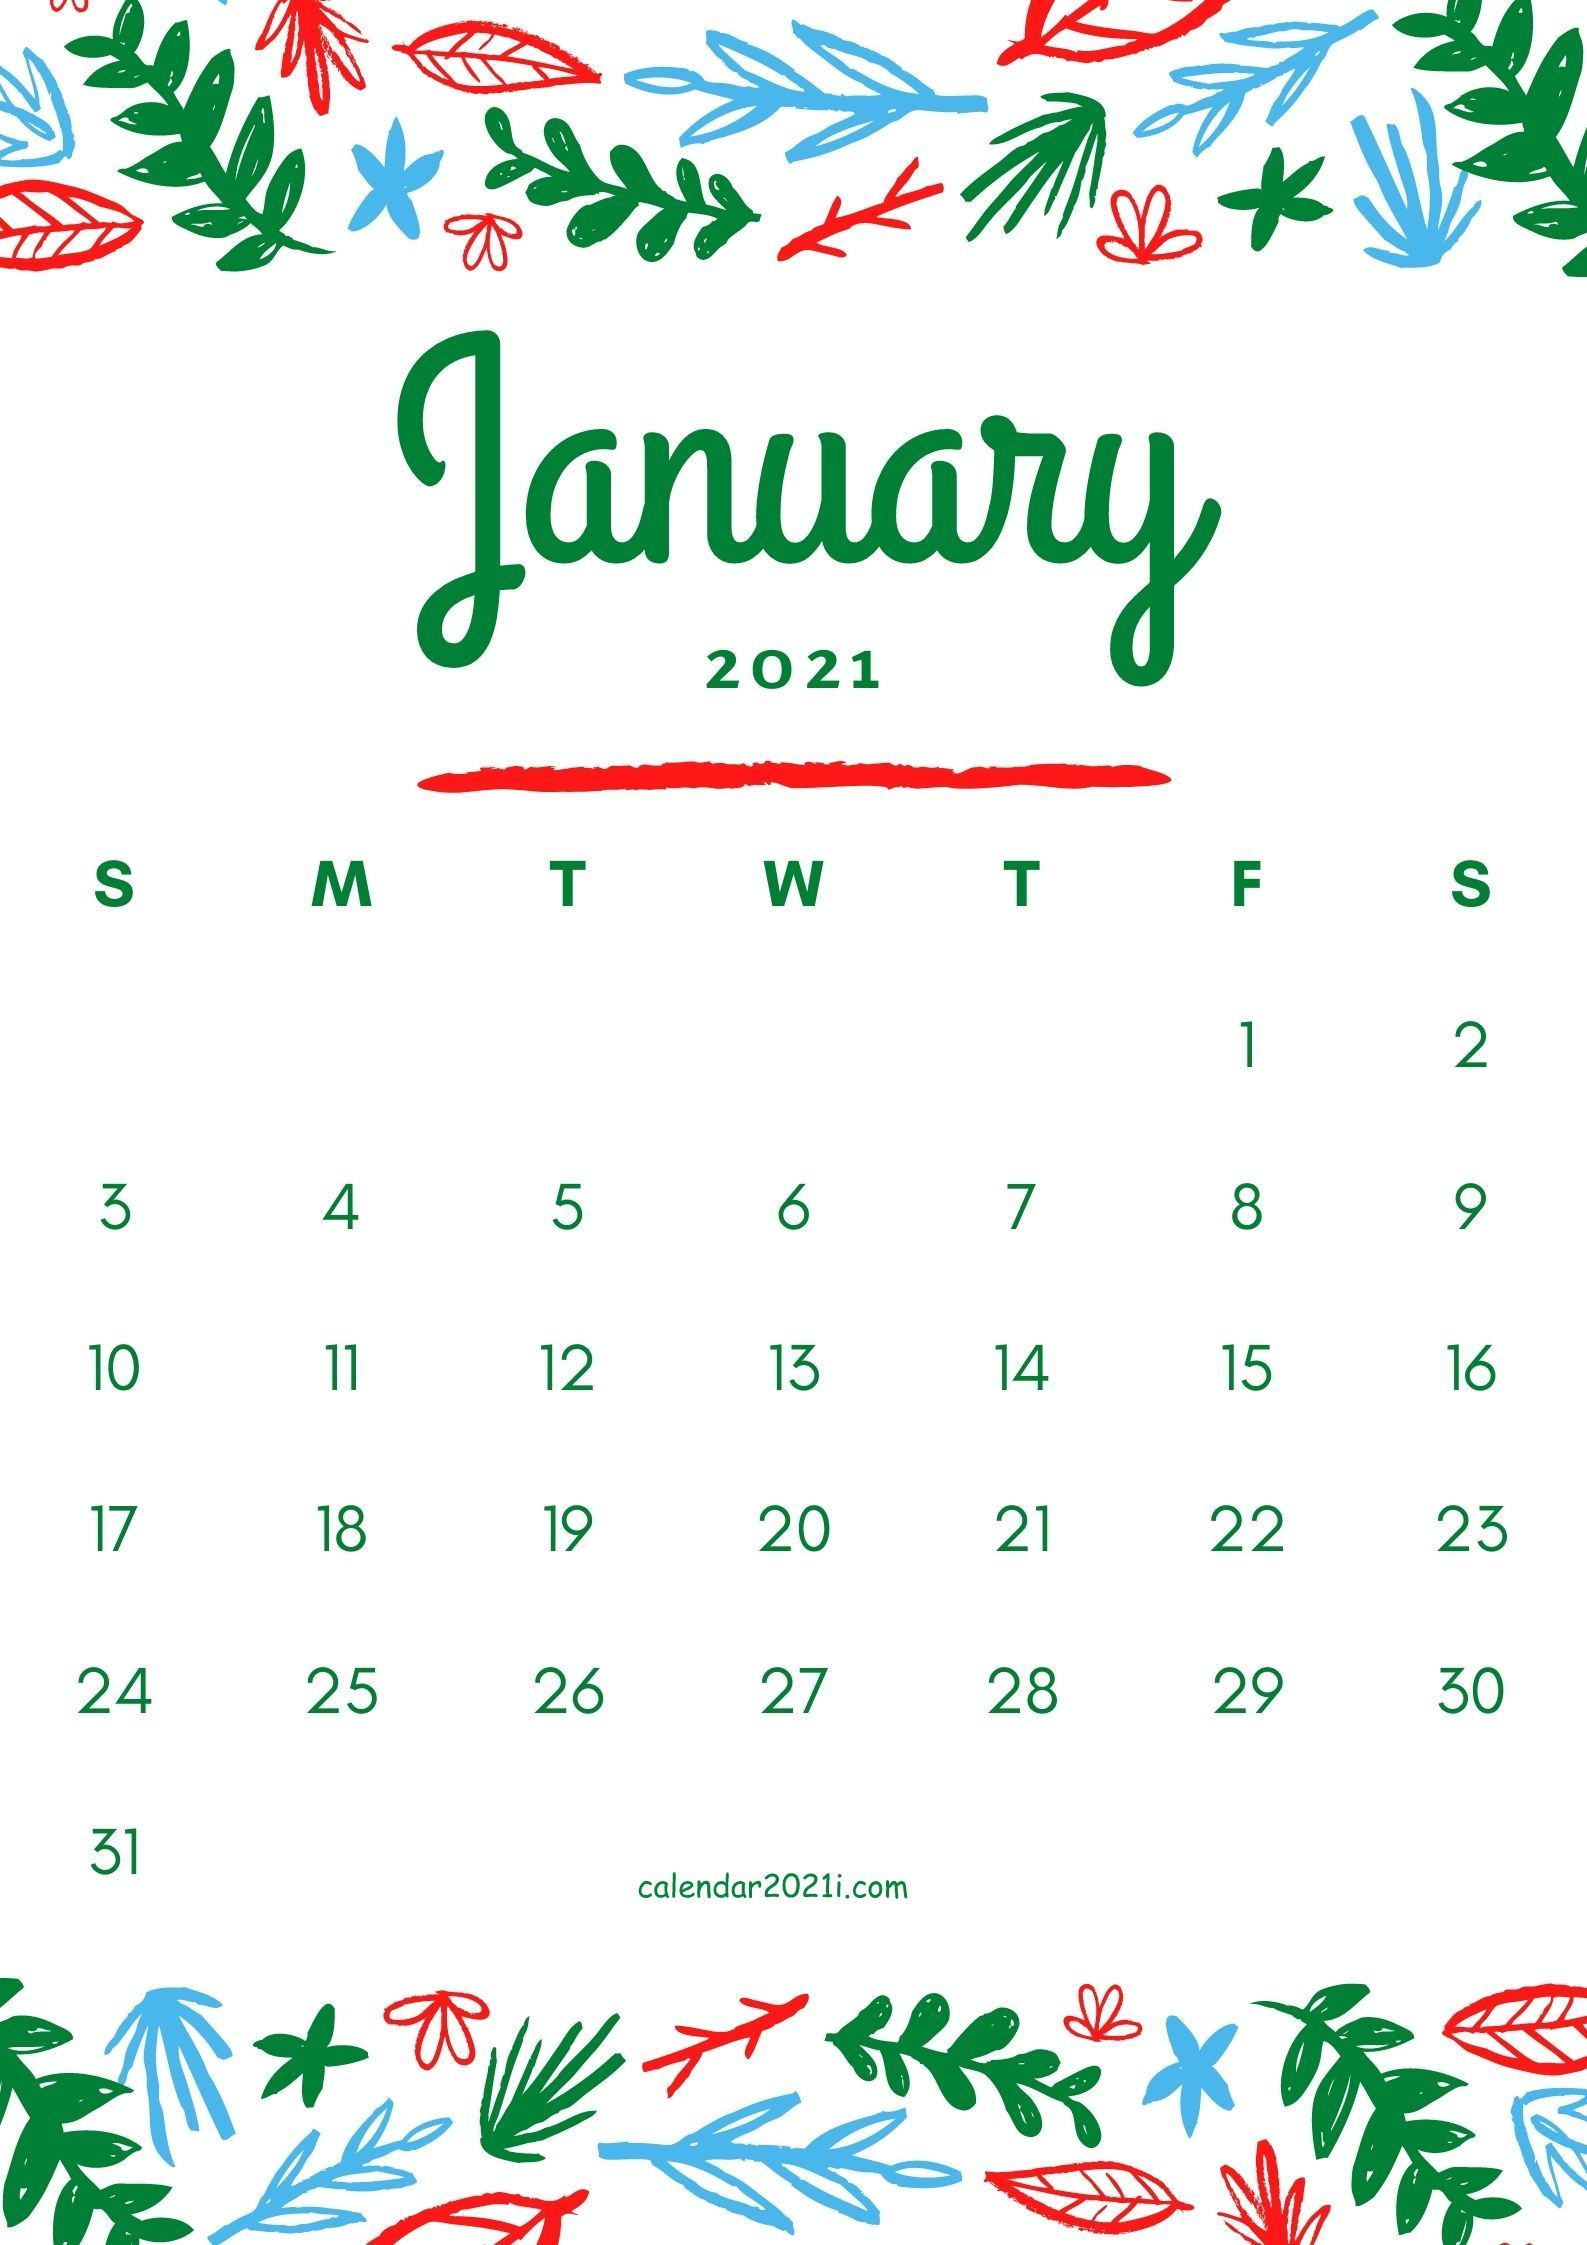 January 2021 Floral Calendar Printable Template Free December 2021 Calendar Wallpaper